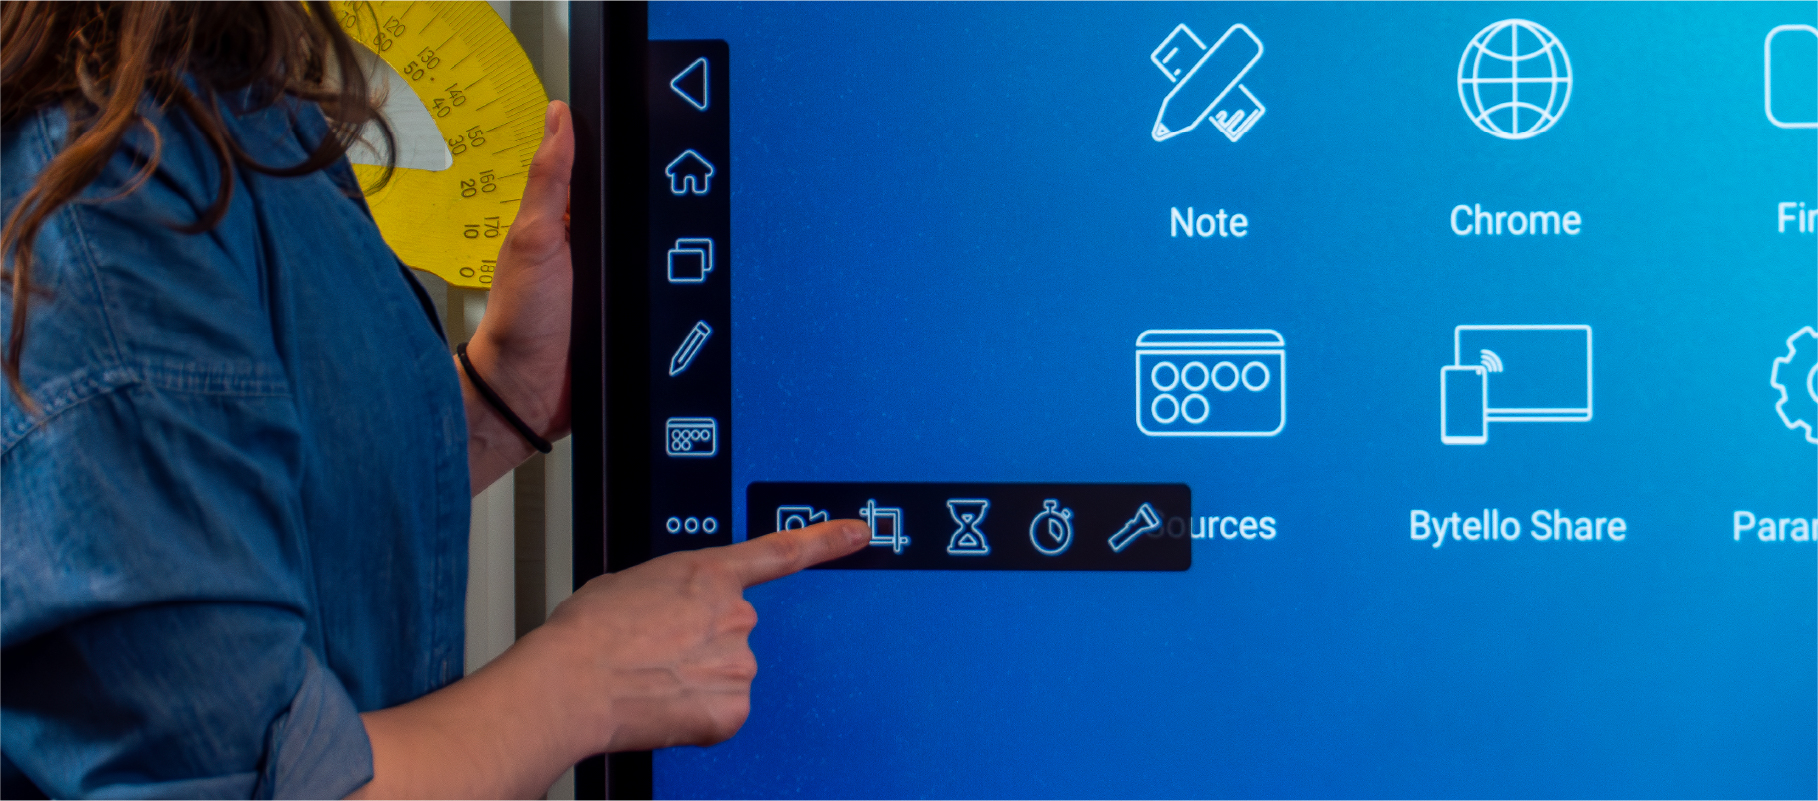 tablette géante android écran interactif speechitouch